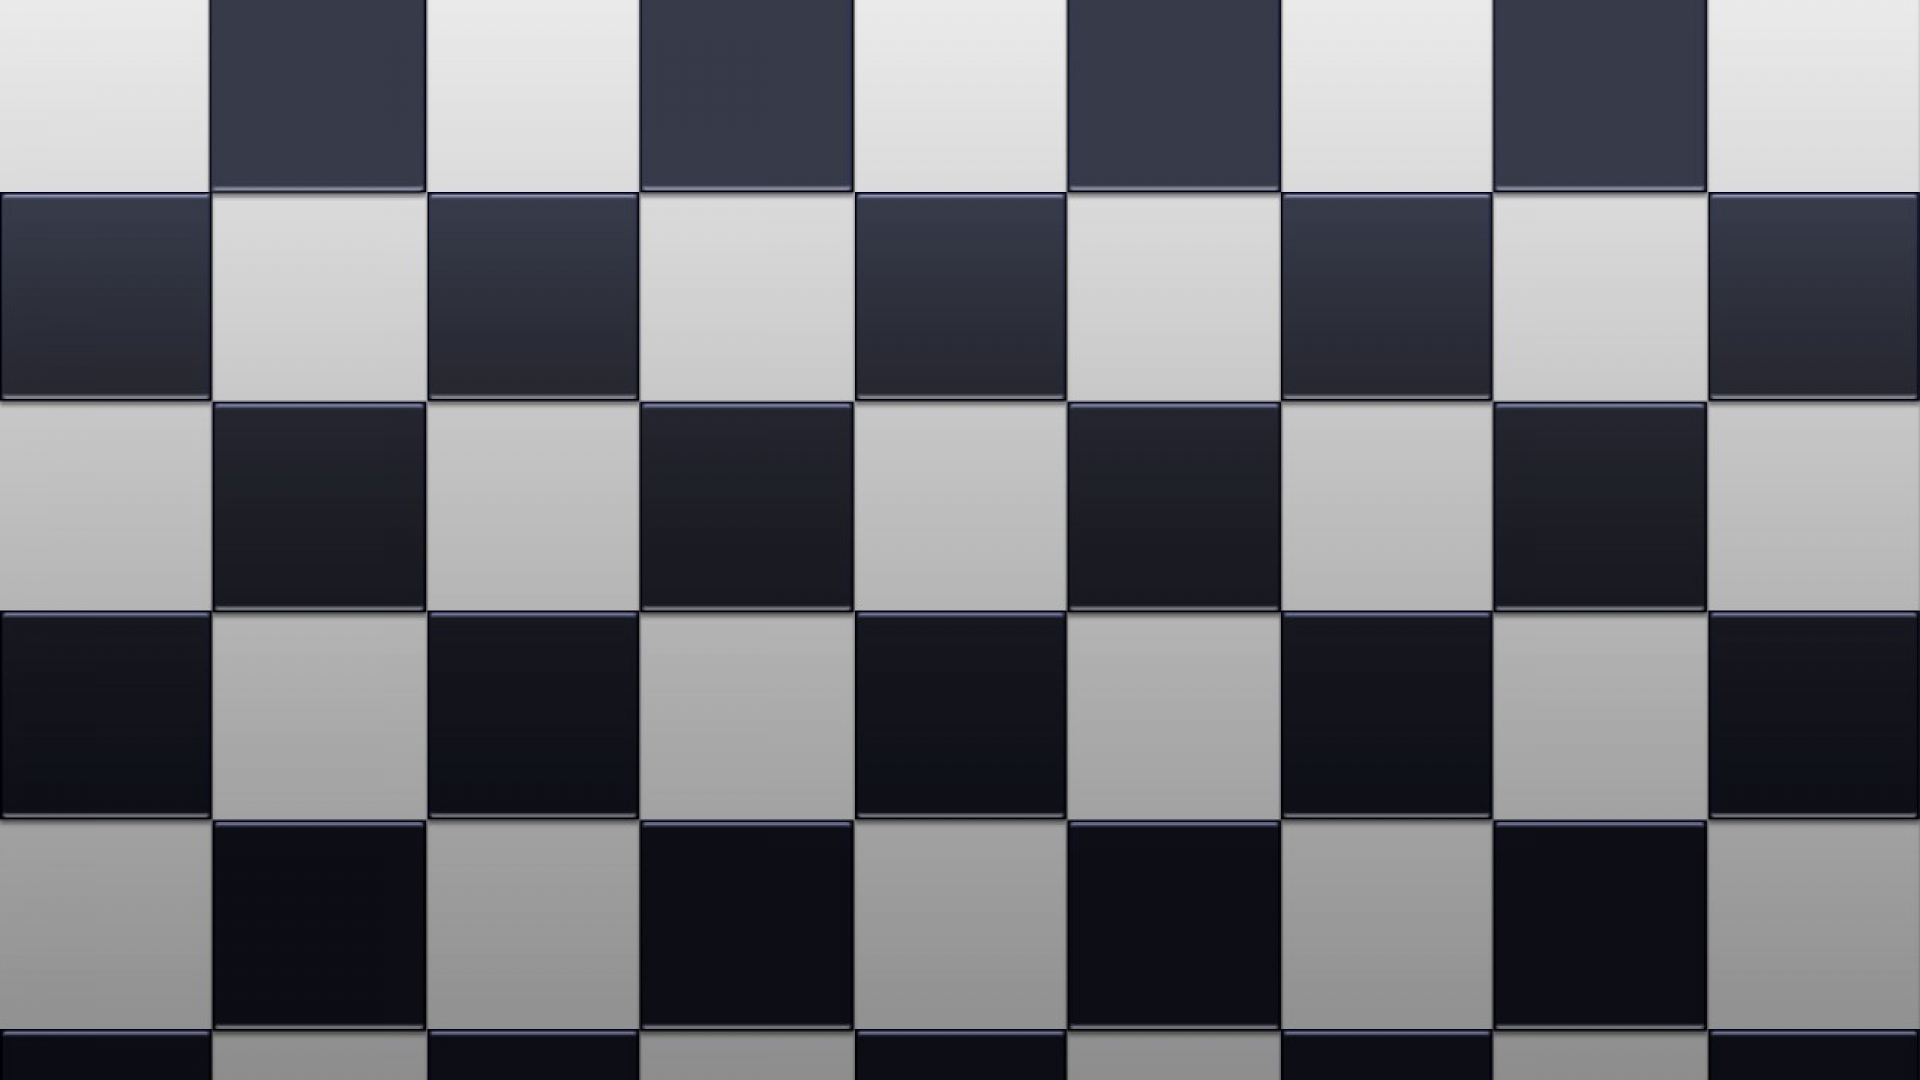 Wp Content Uploads Chess Board Wallpaper Jpg